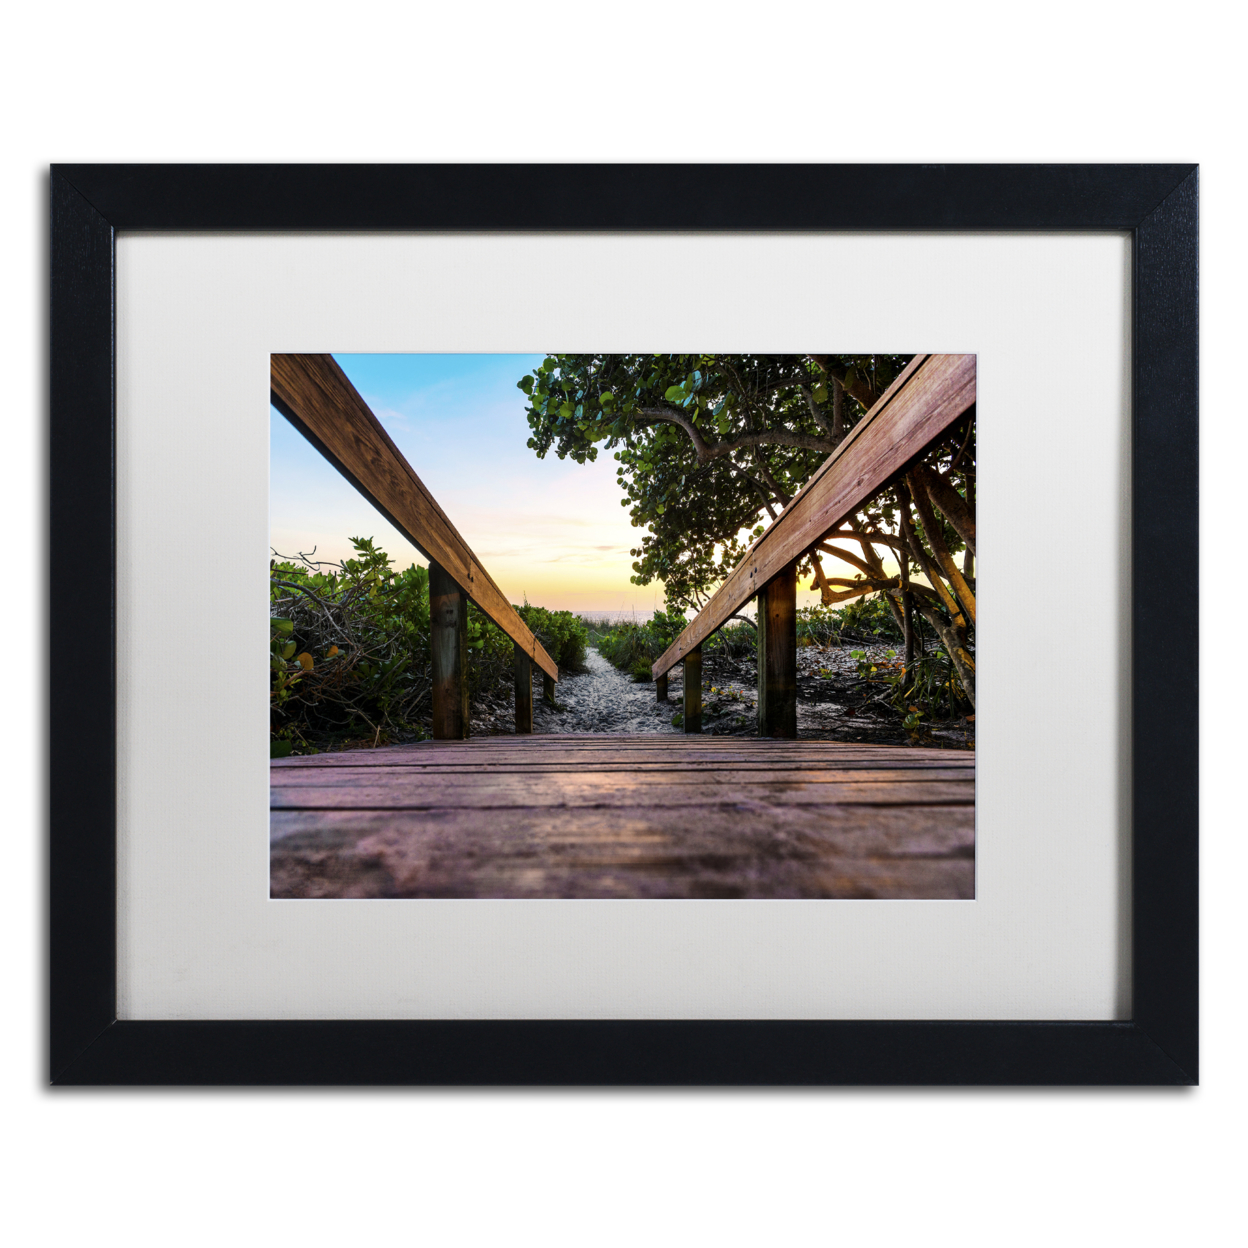 Philippe Hugonnard 'Boardwalk Miami' Black Wooden Framed Art 18 X 22 Inches